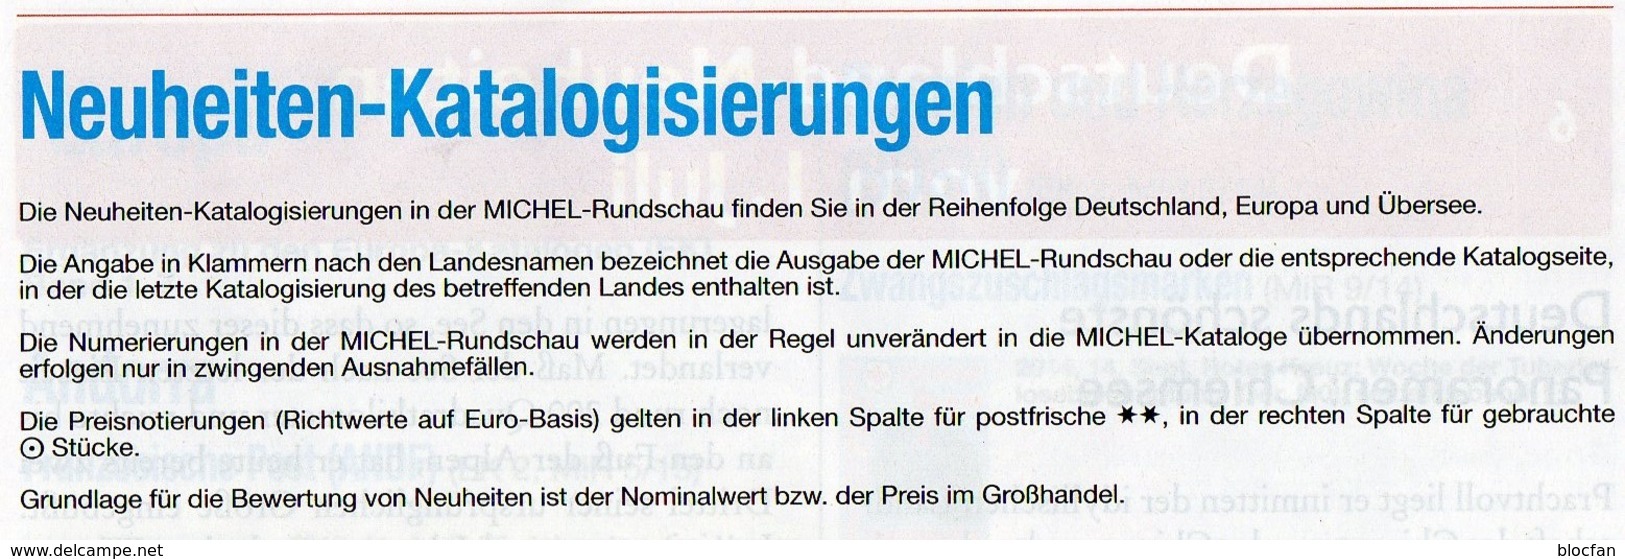 MICHEL Briefmarken Rundschau 8/2018 Neu 6€ Stamps Of The World Catalogue/magacine Of Germany ISBN 978-3-95402-600-5 - German (from 1941)